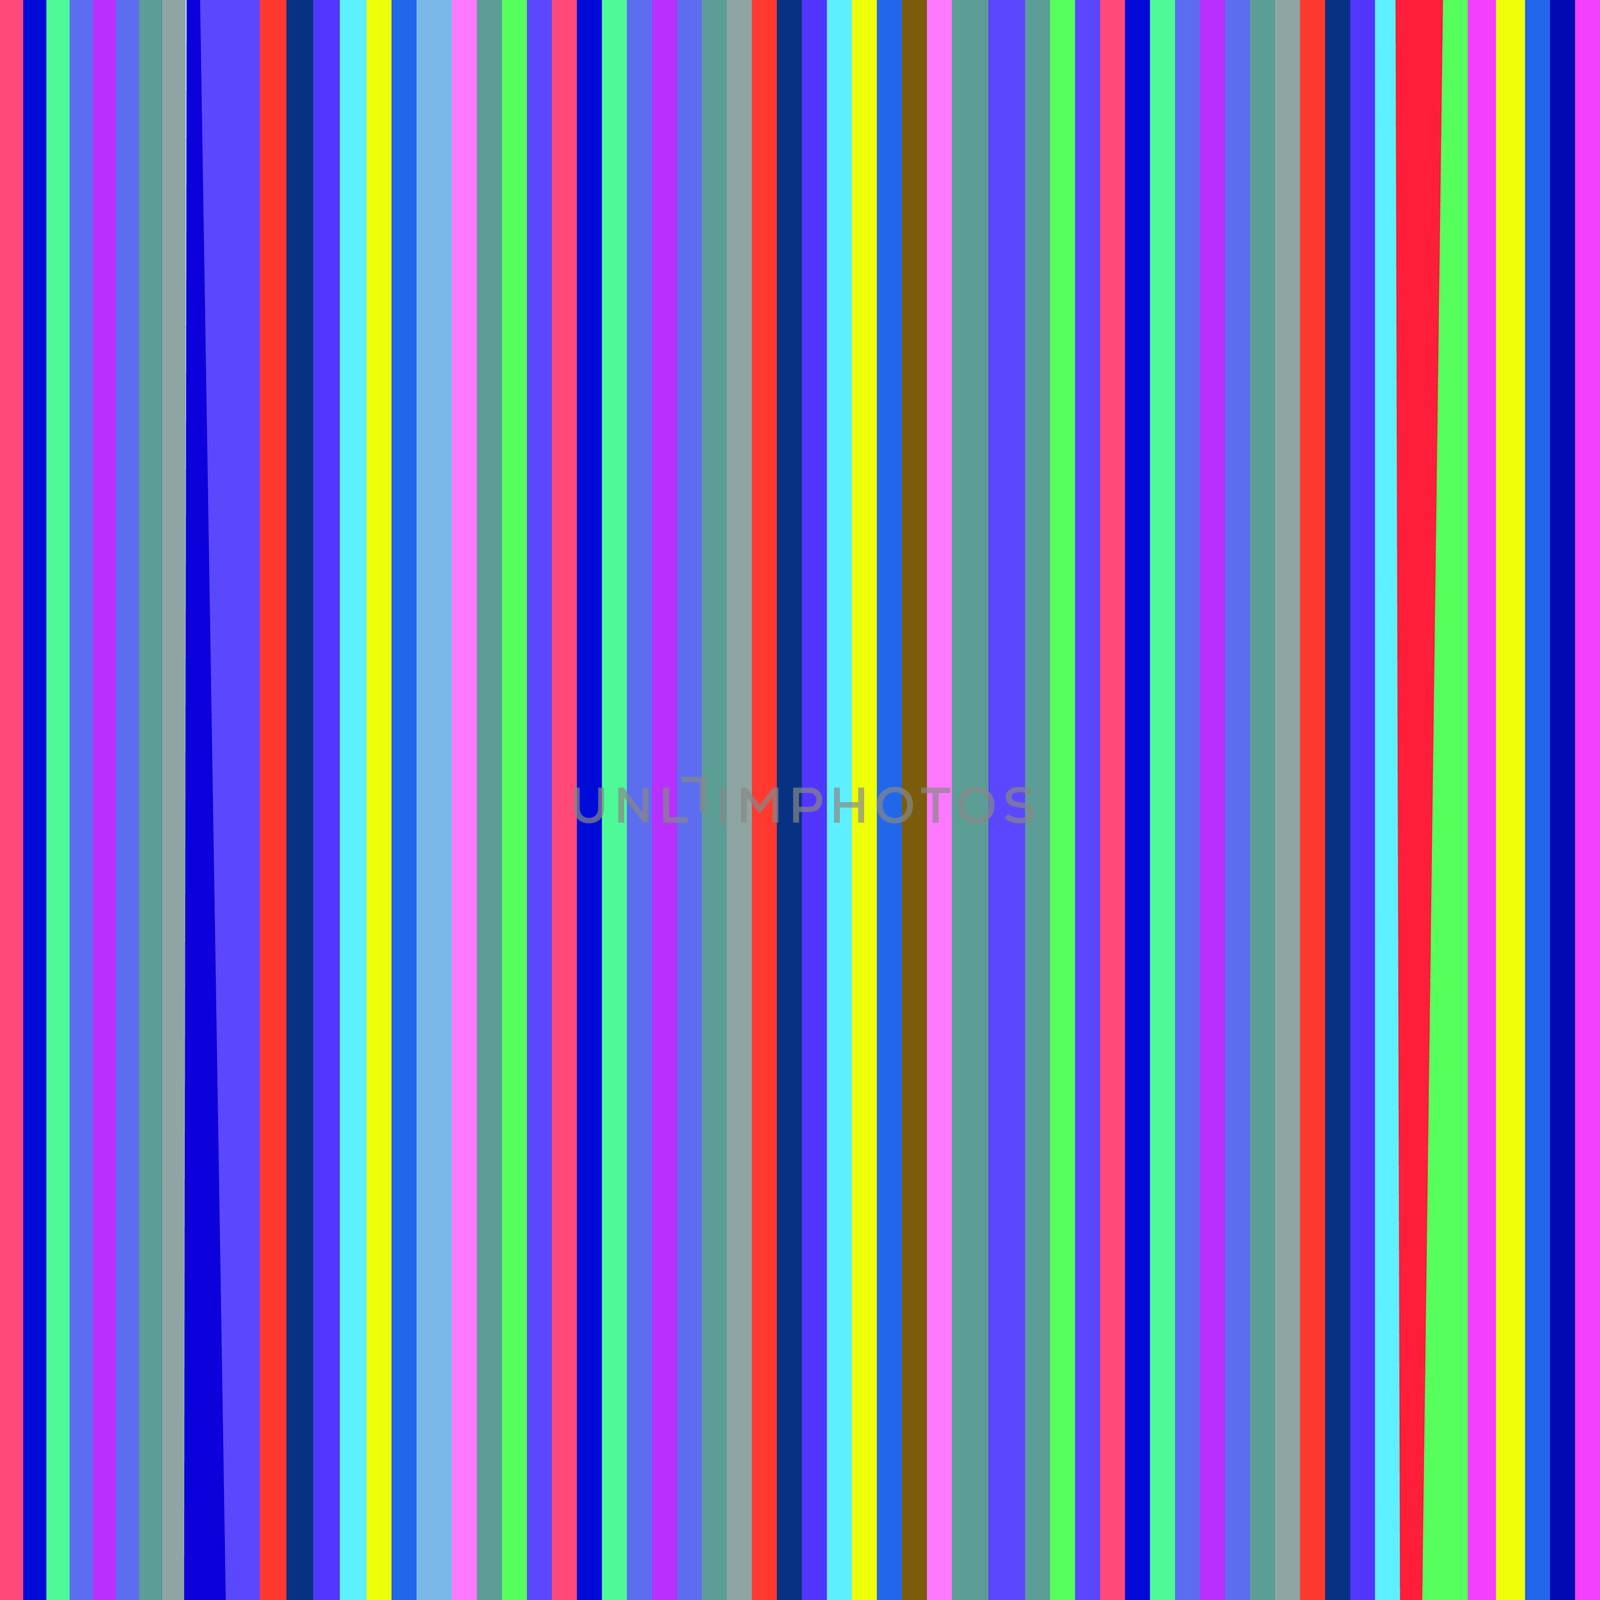 Coloured stripes, vector art illustration